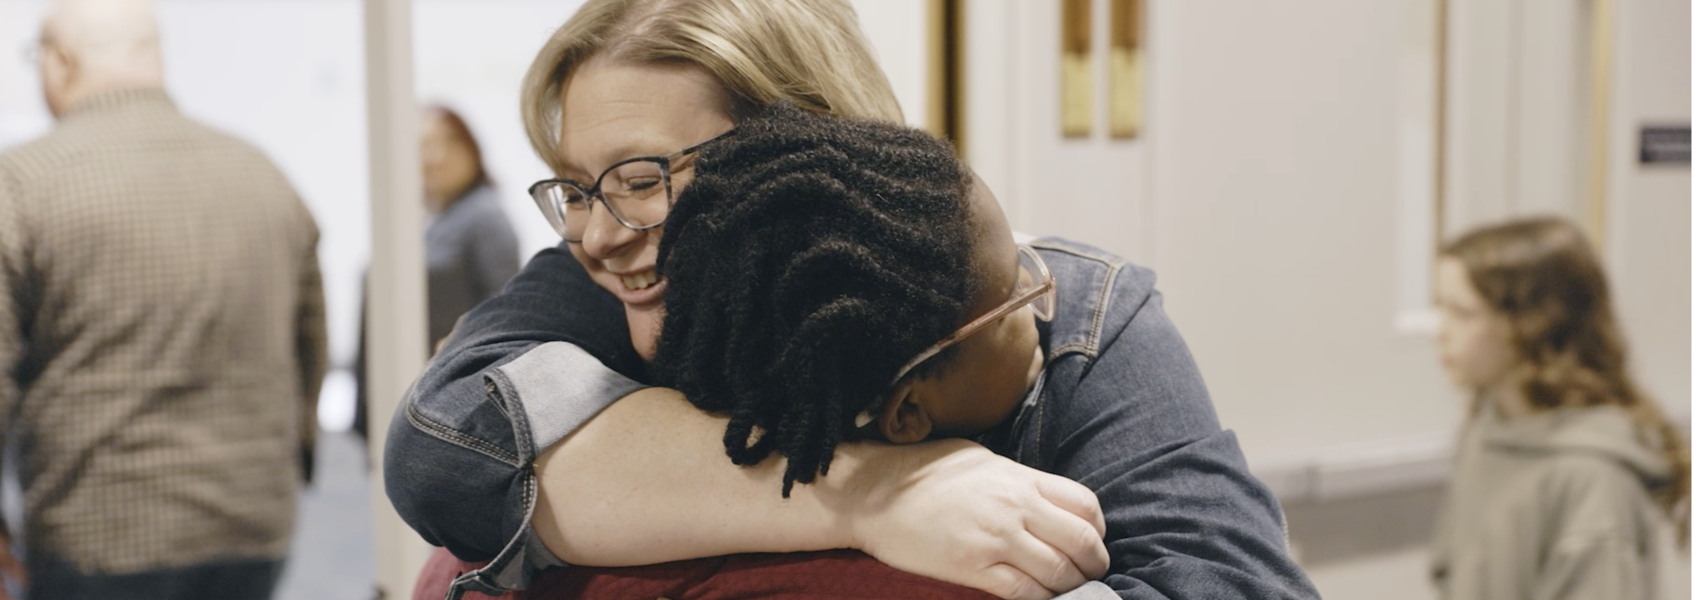 A church volunteer hugs a teen girl